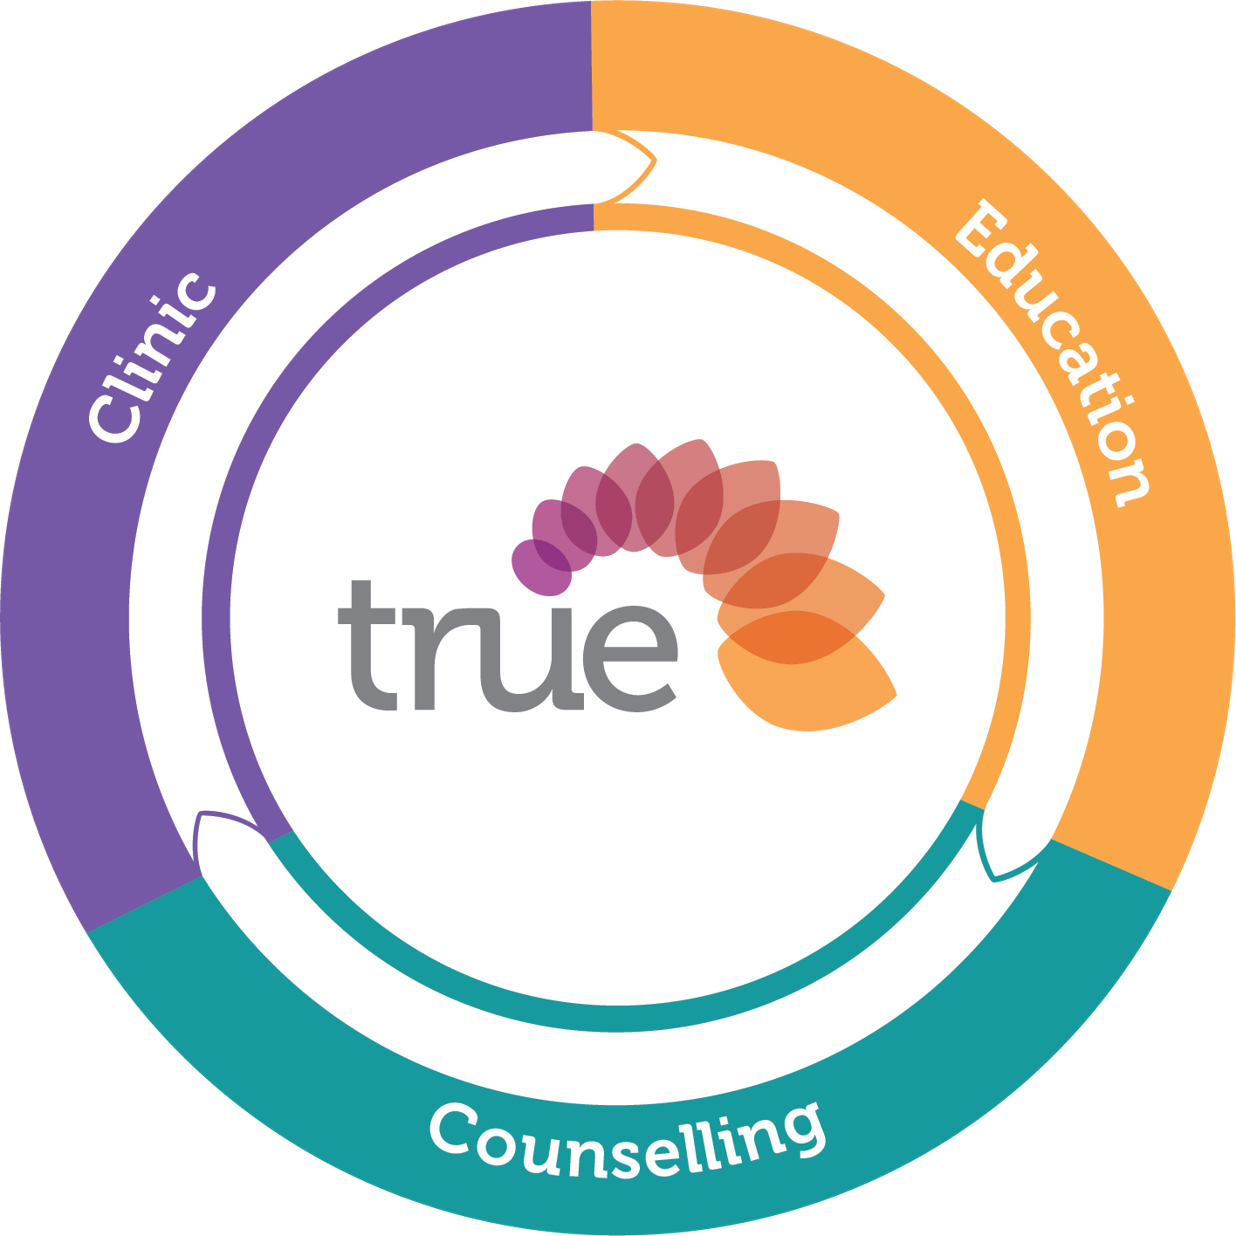 True logo - services wheel